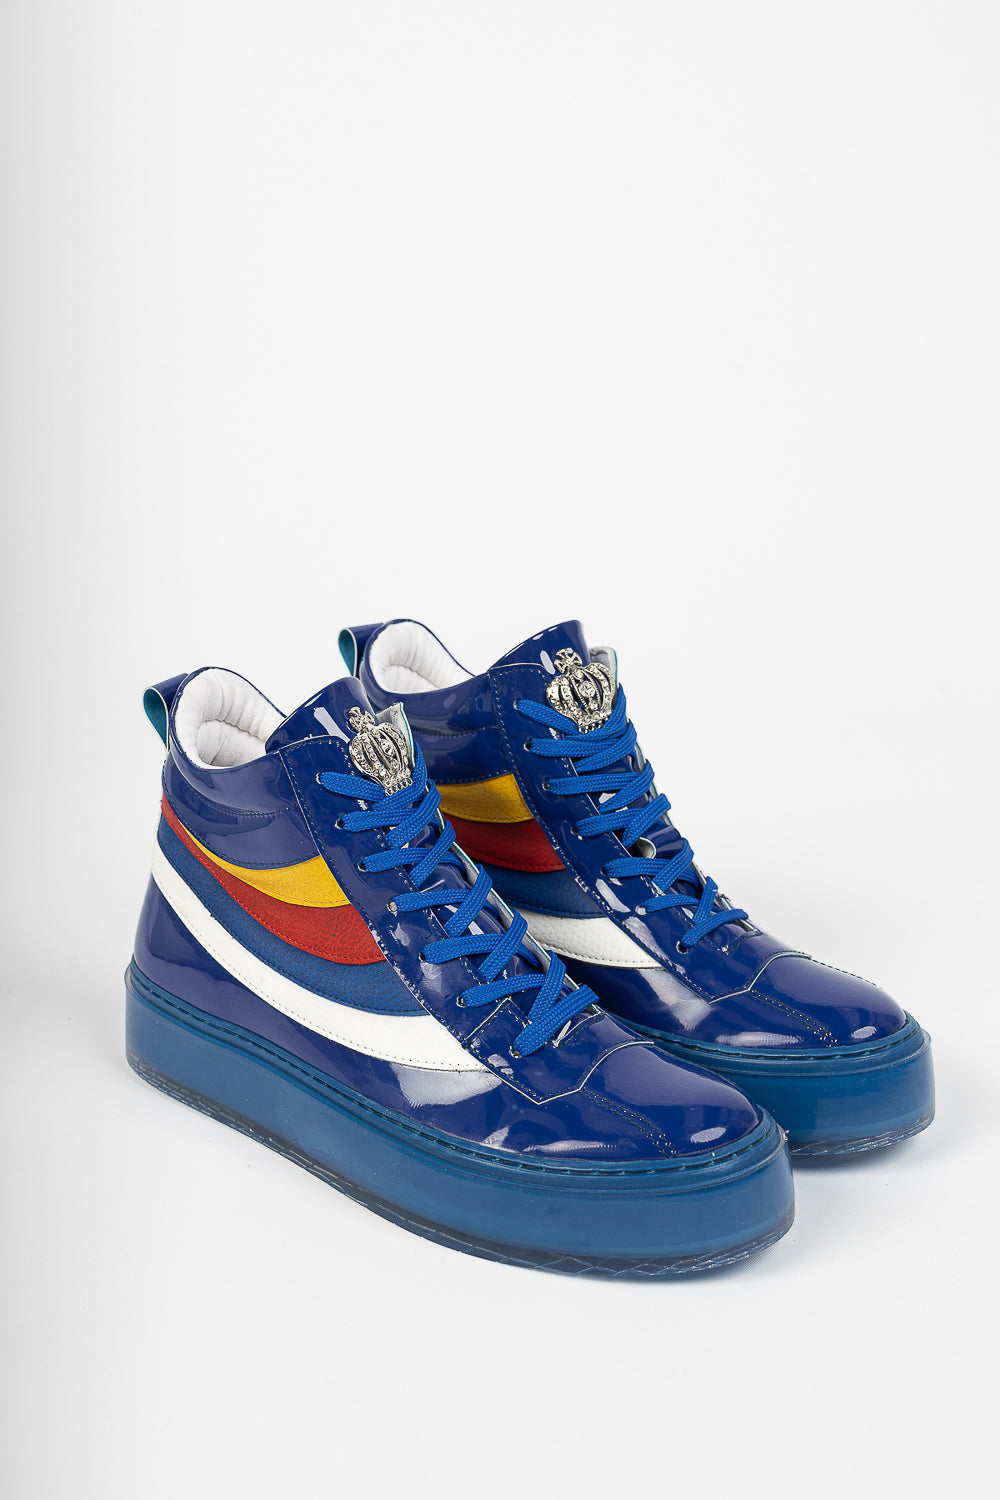 Majesty Dark Blue - Swagg Splash Sneakers